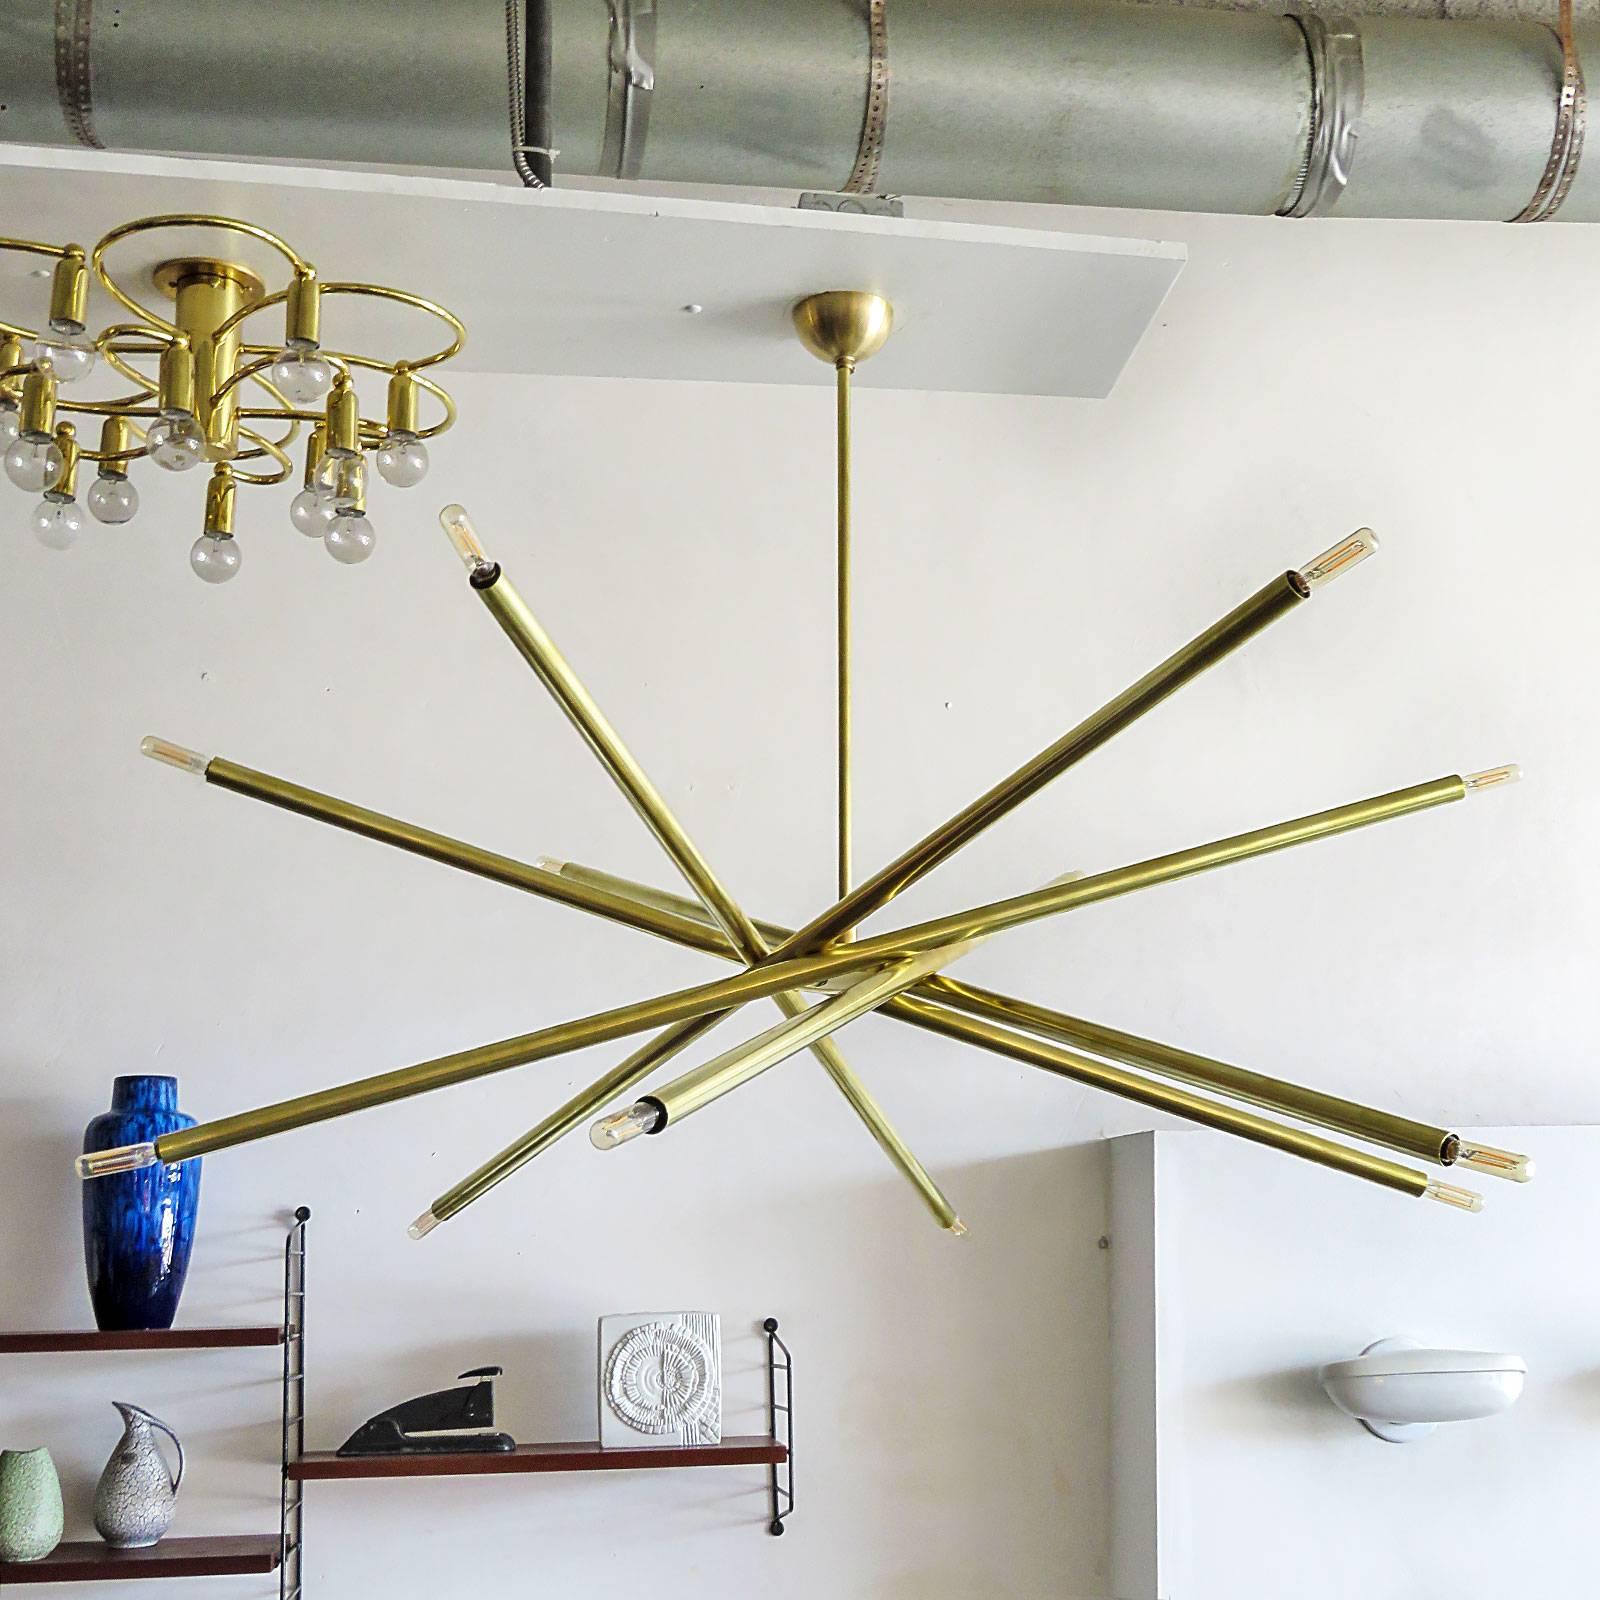 Stunning extra large six-arm, twelve-light chandelier in raw brass, diameter 48